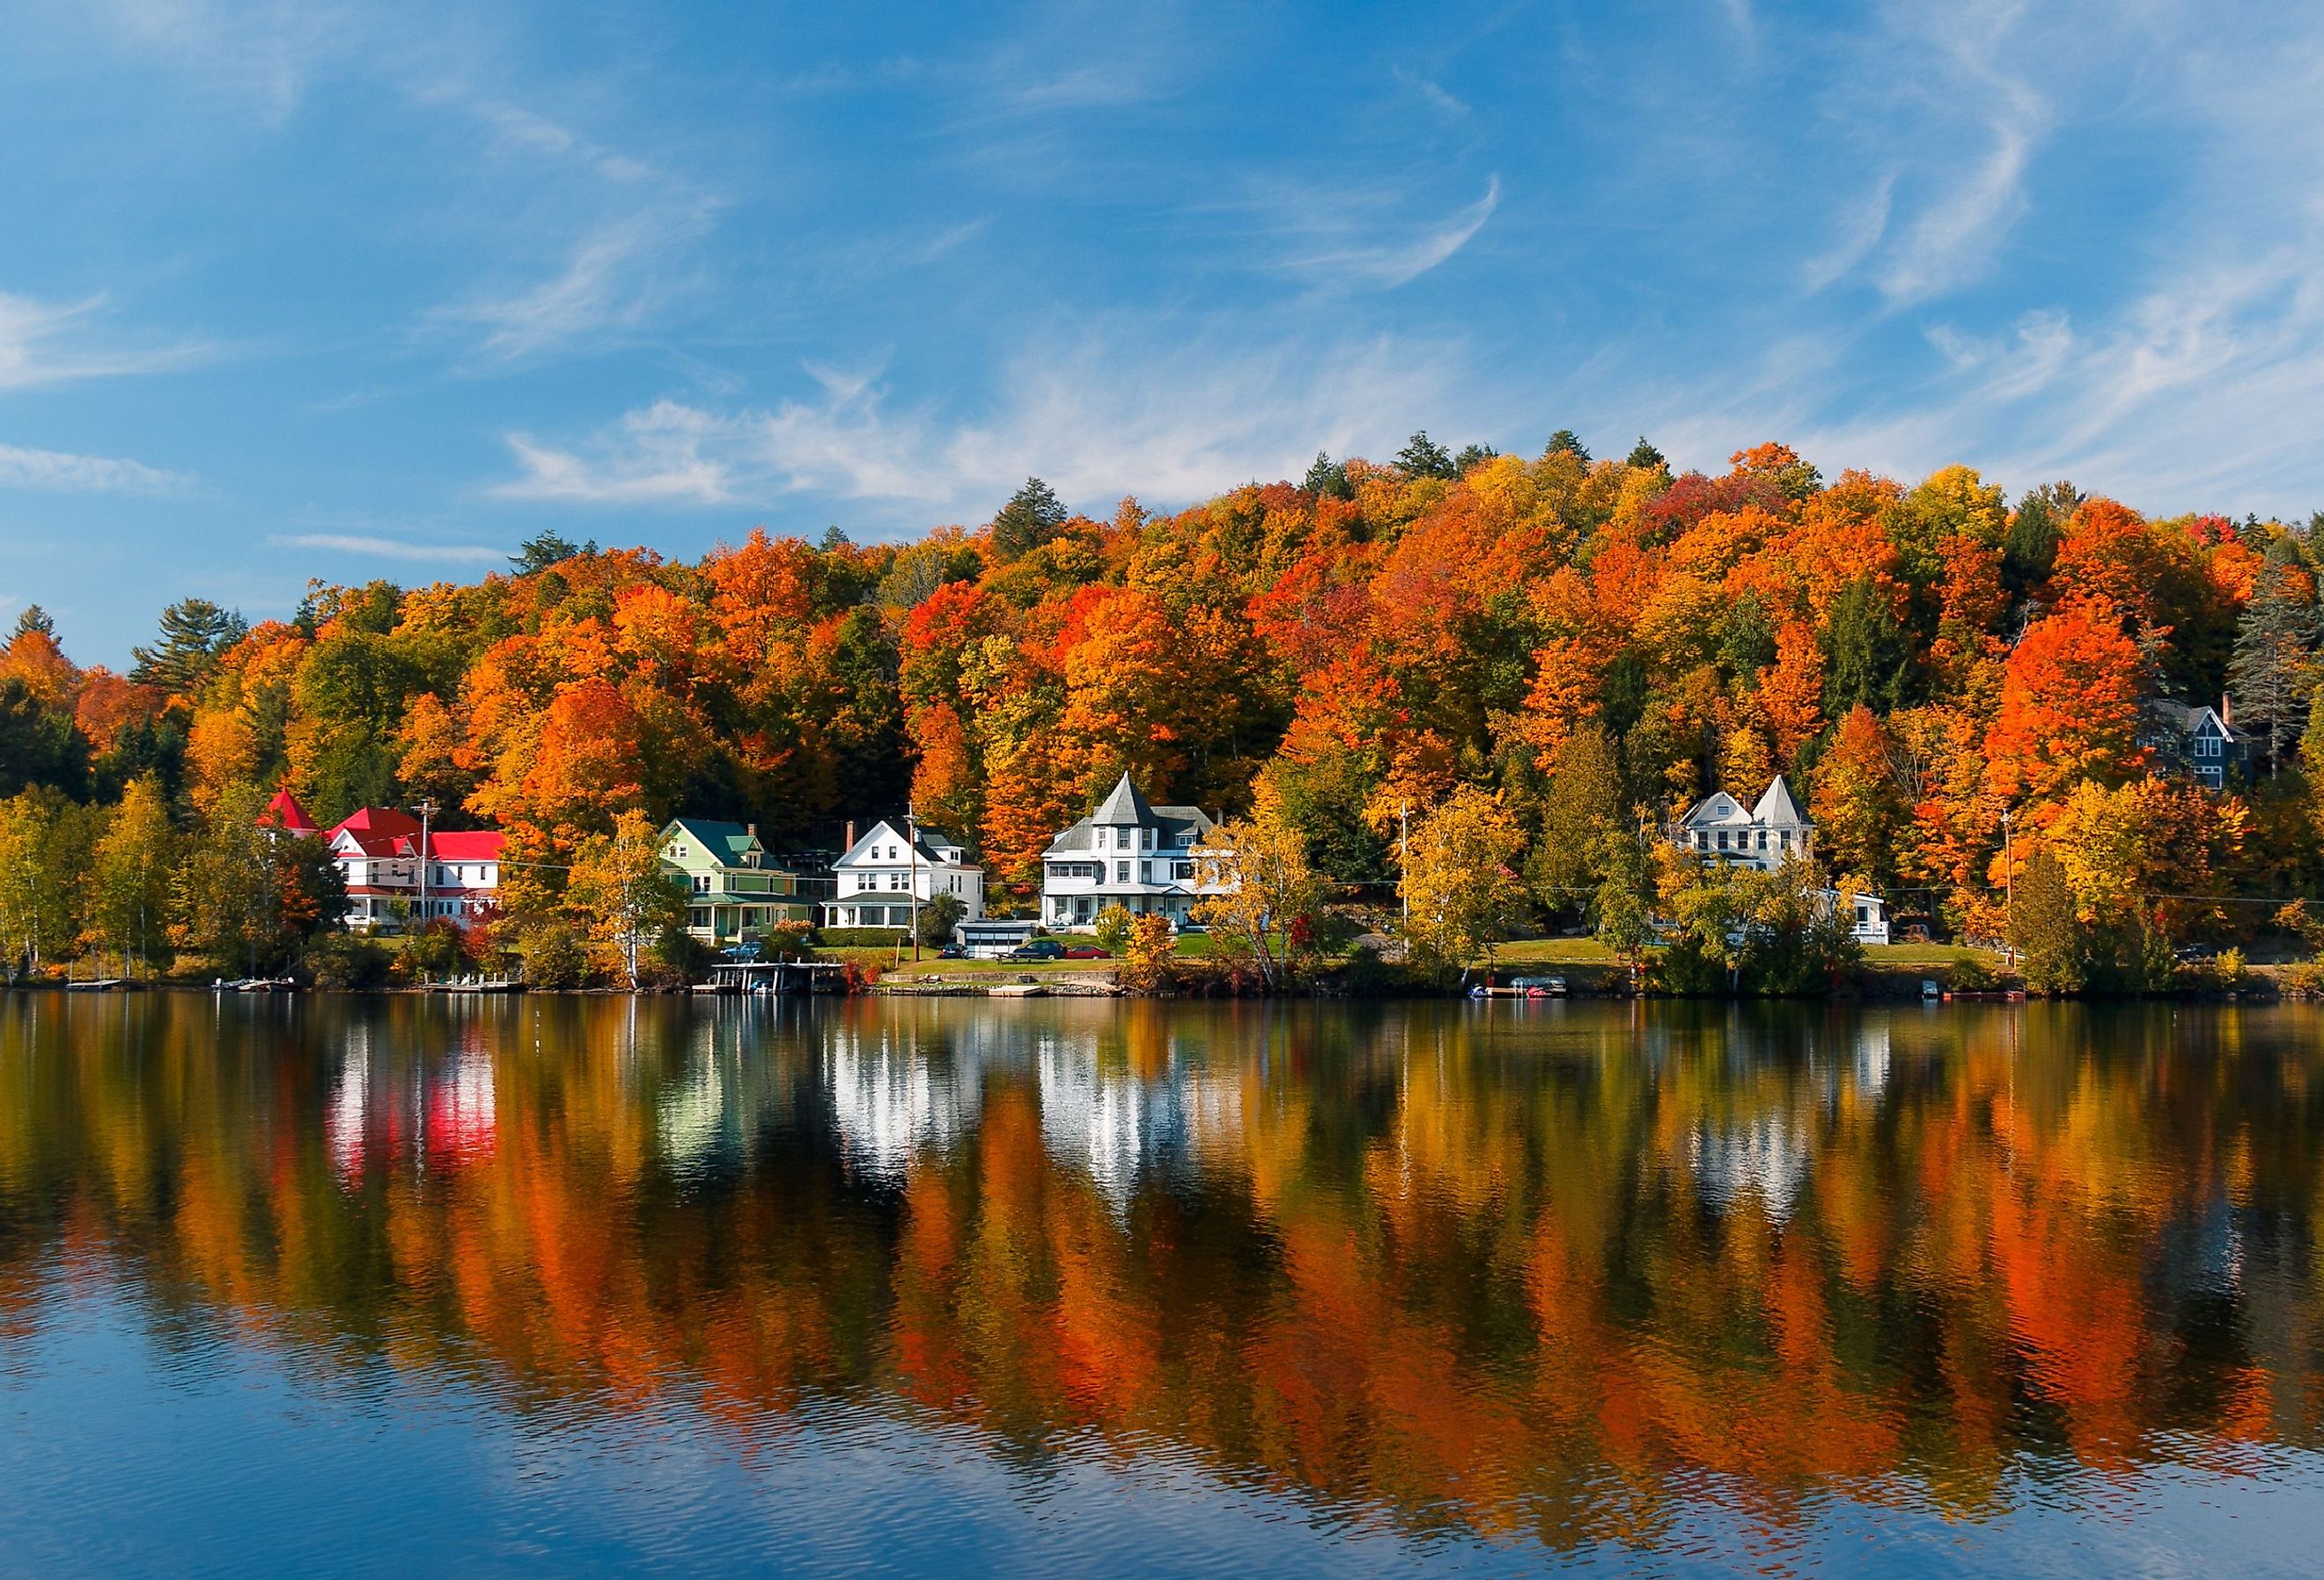 Homes in Saranac Lake, New York with fall foliage along the water.